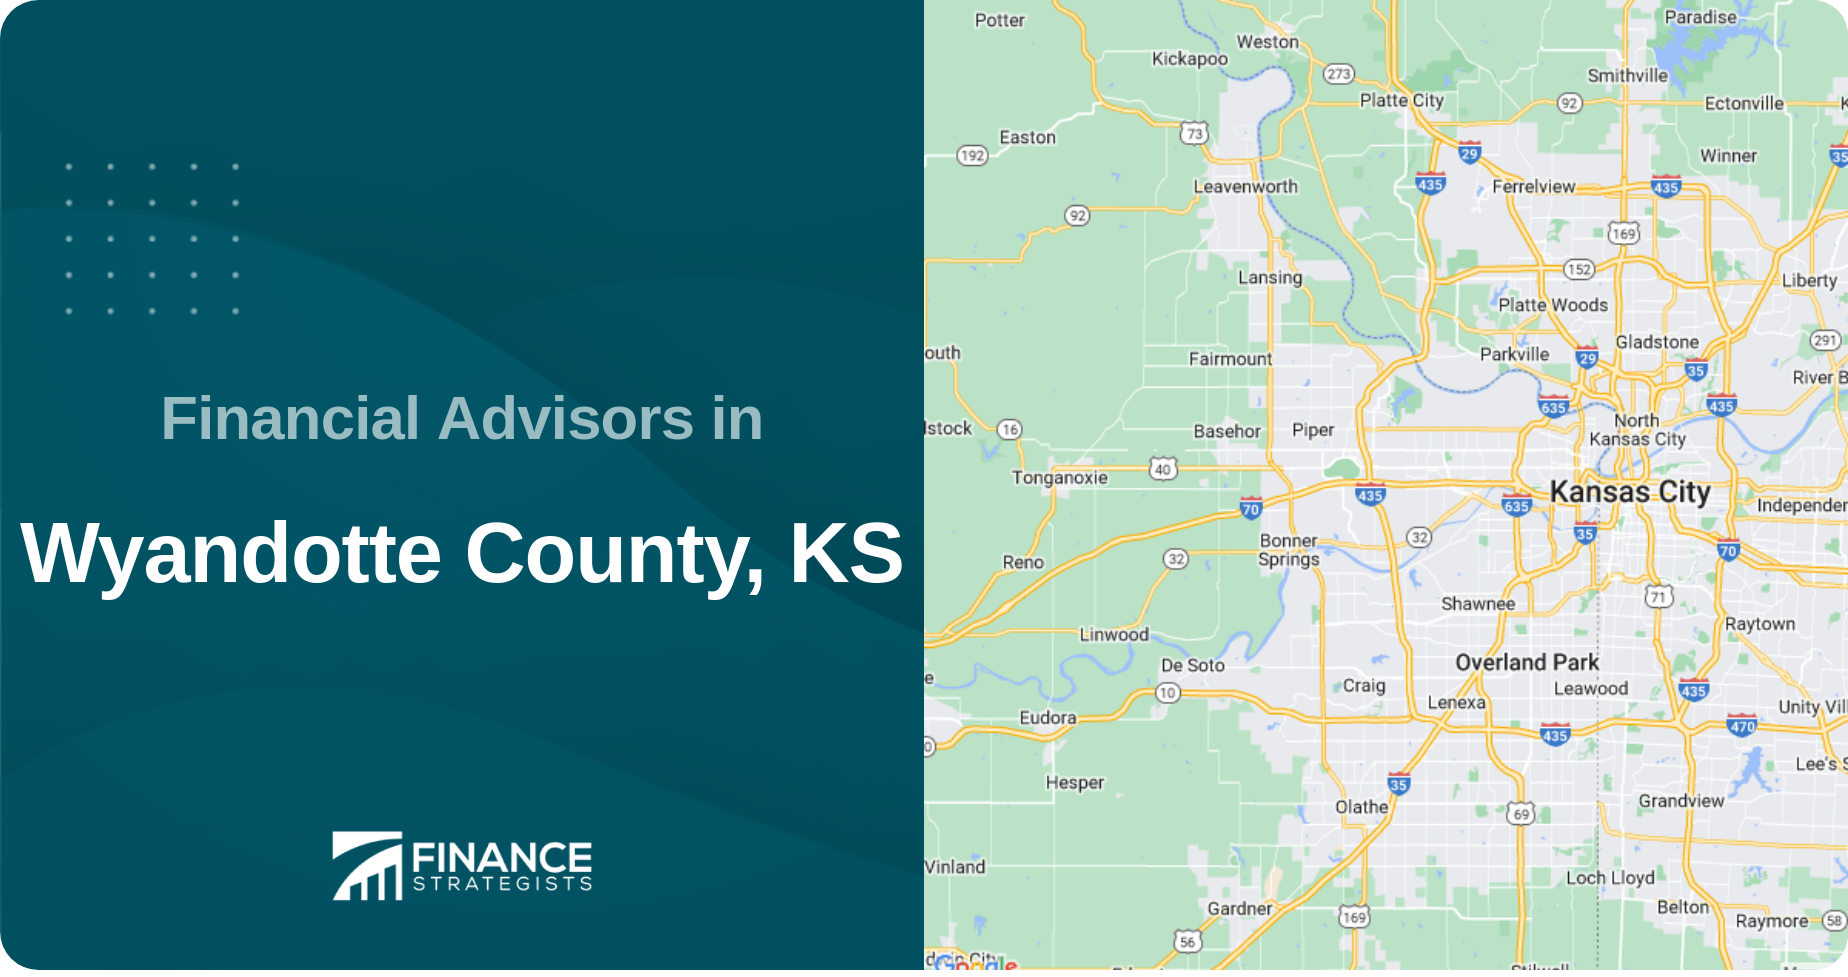 Financial Advisors in Wyandotte County, KS